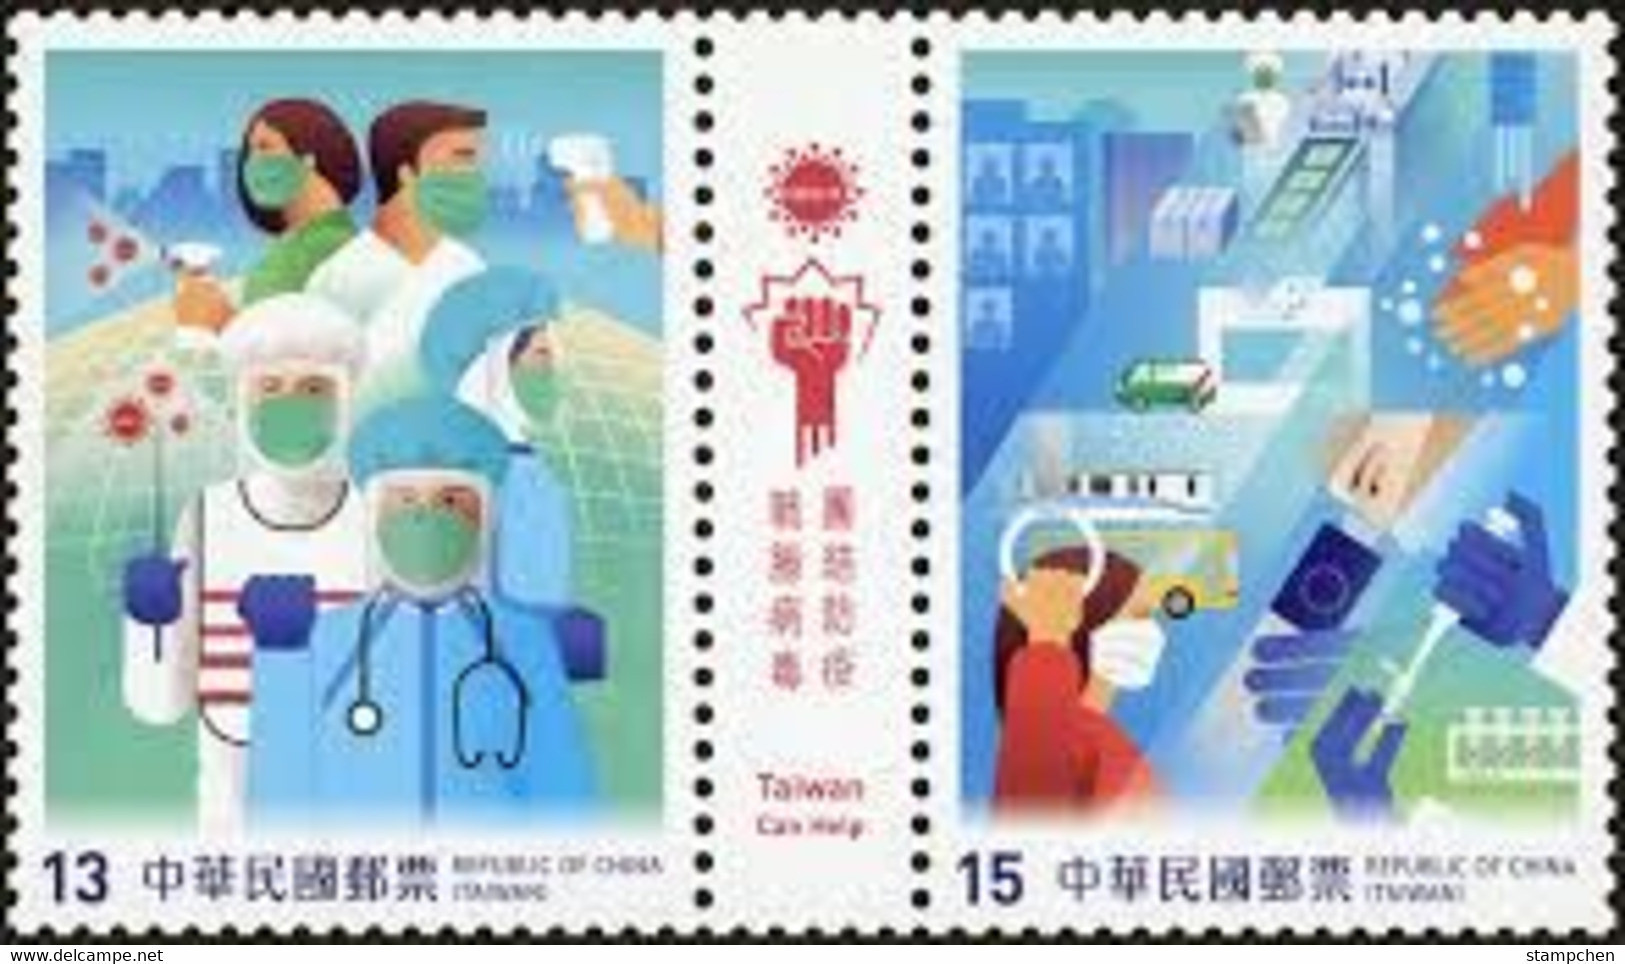 Taiwan 2020 COVID-19 Prevention Stamps Mask Doctor Nurse Ambulance MRT Train - Nuevos